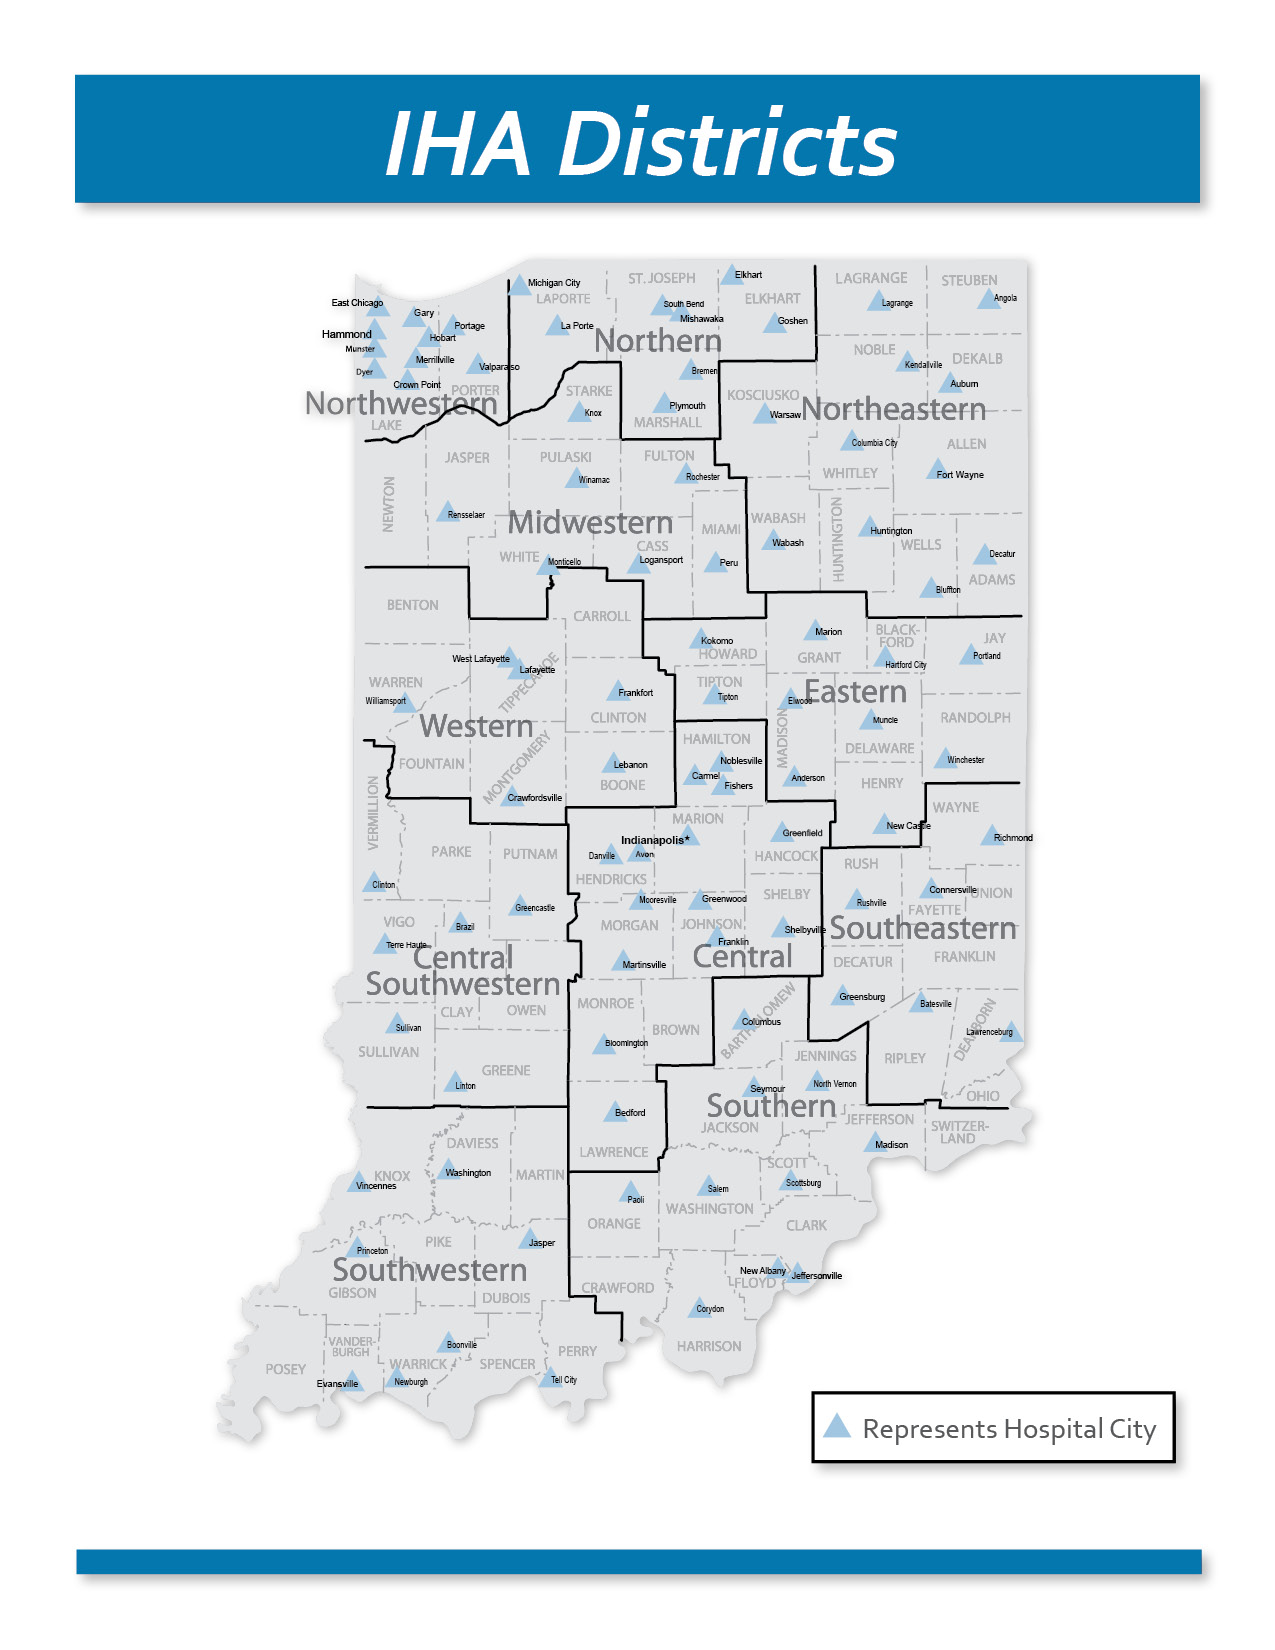 11 IHA Regional Districts across Indiana